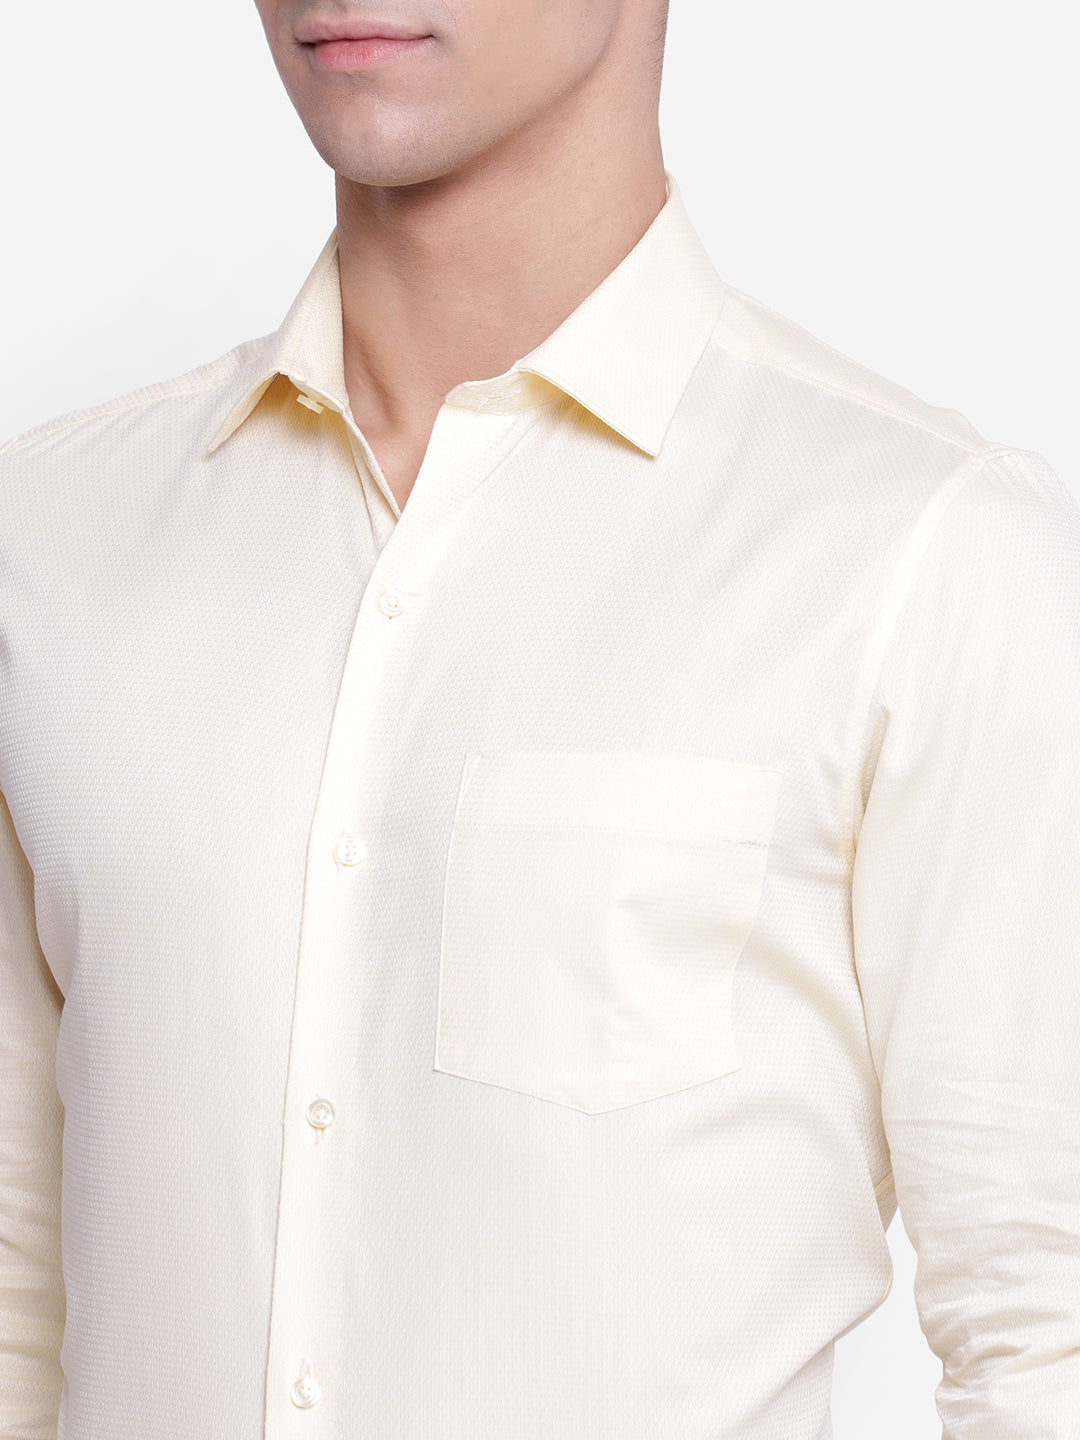 Solid Cream Slim Fit Formal Shirt